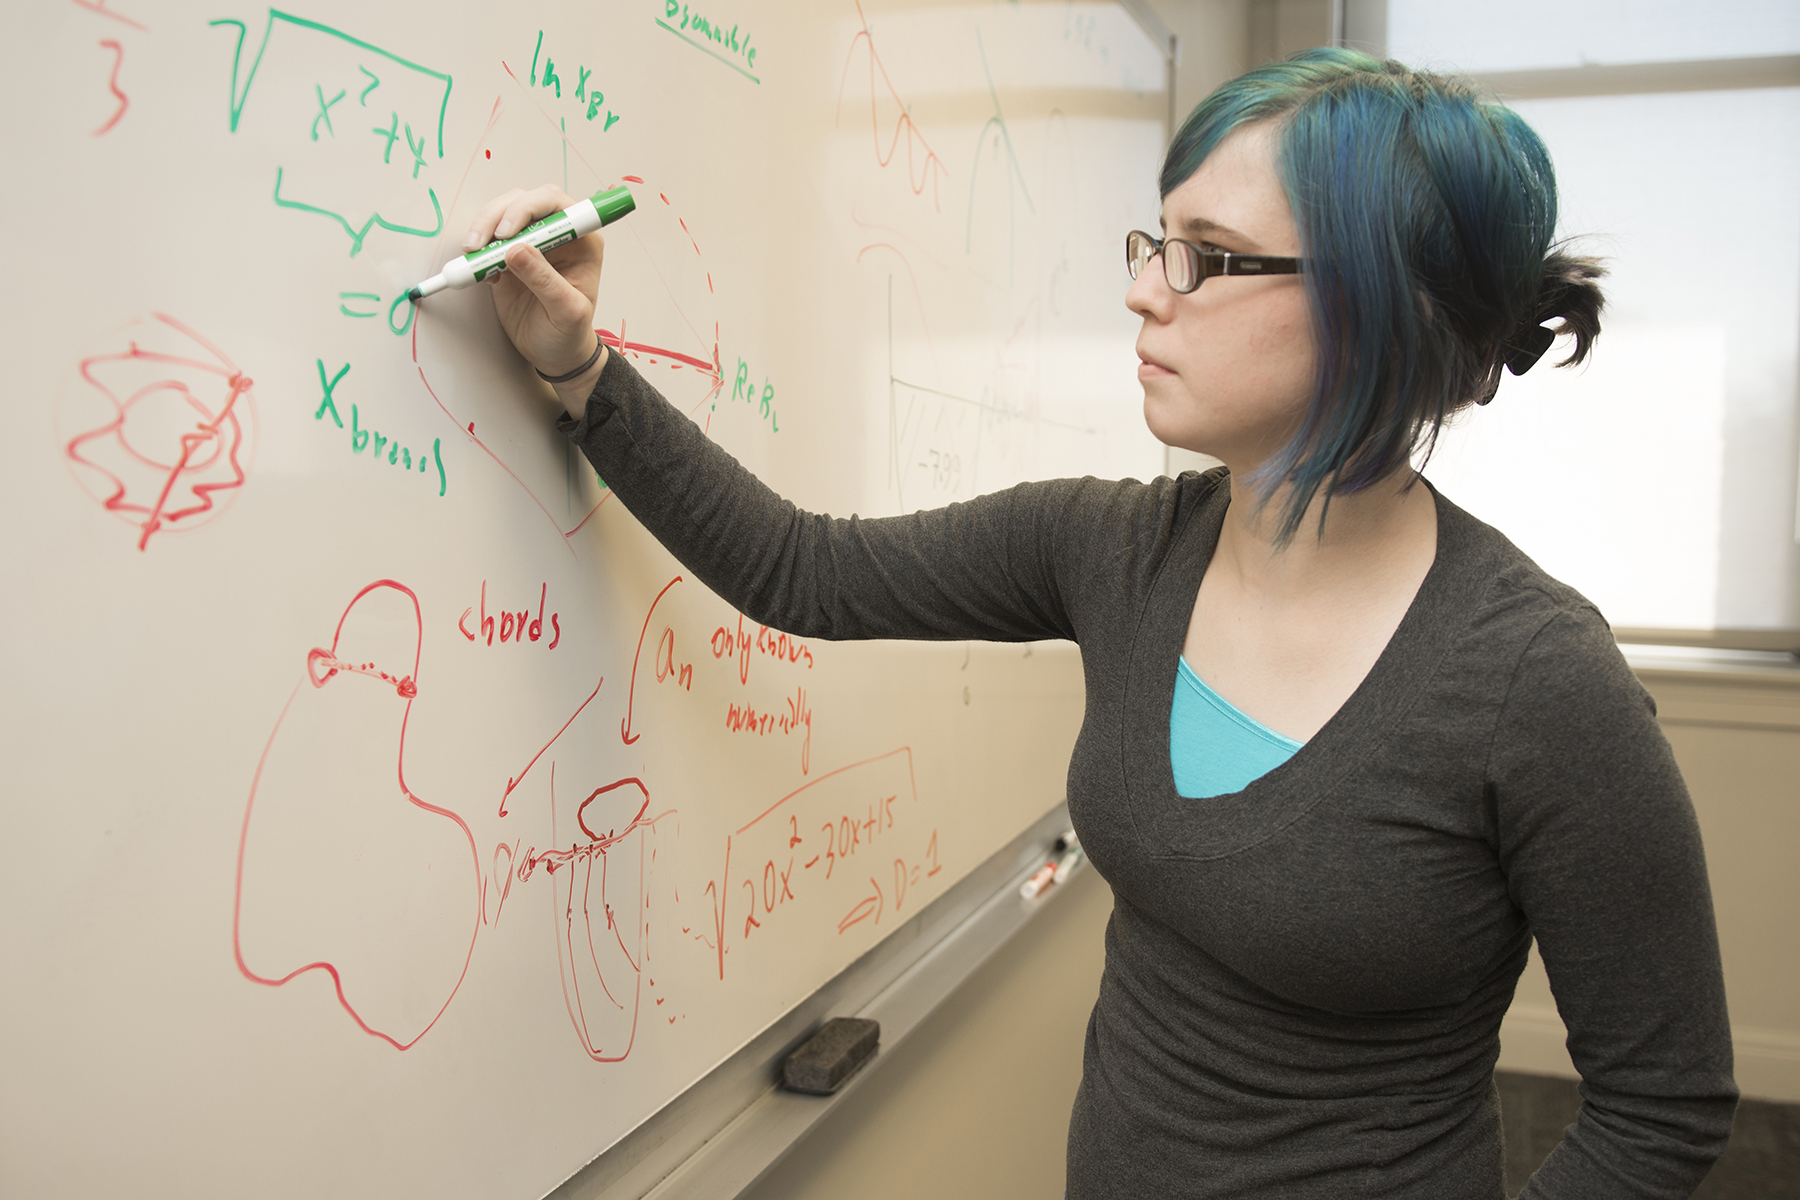 National Science Foundation Fellowship Samantha Norris writing at chalkboard